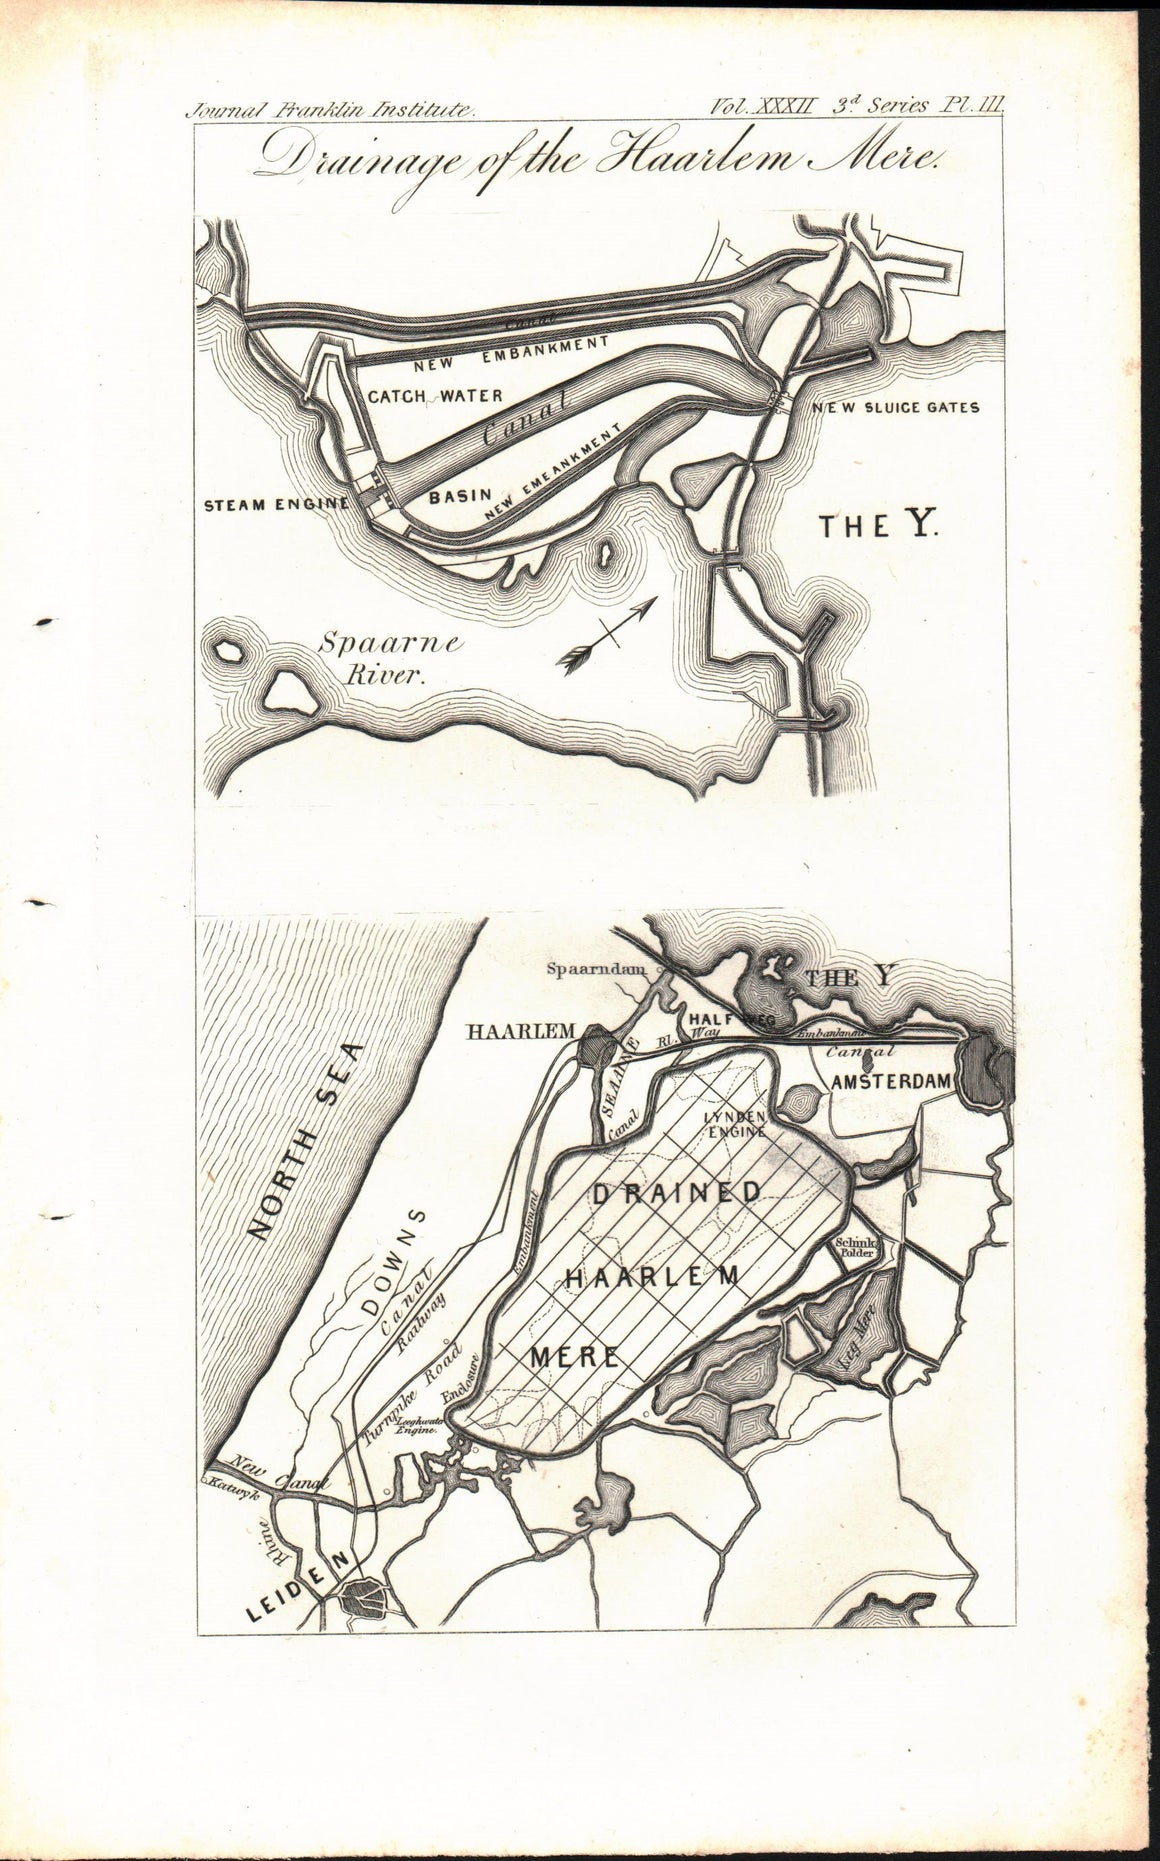 1856 Drainage of the Haarlem Meir